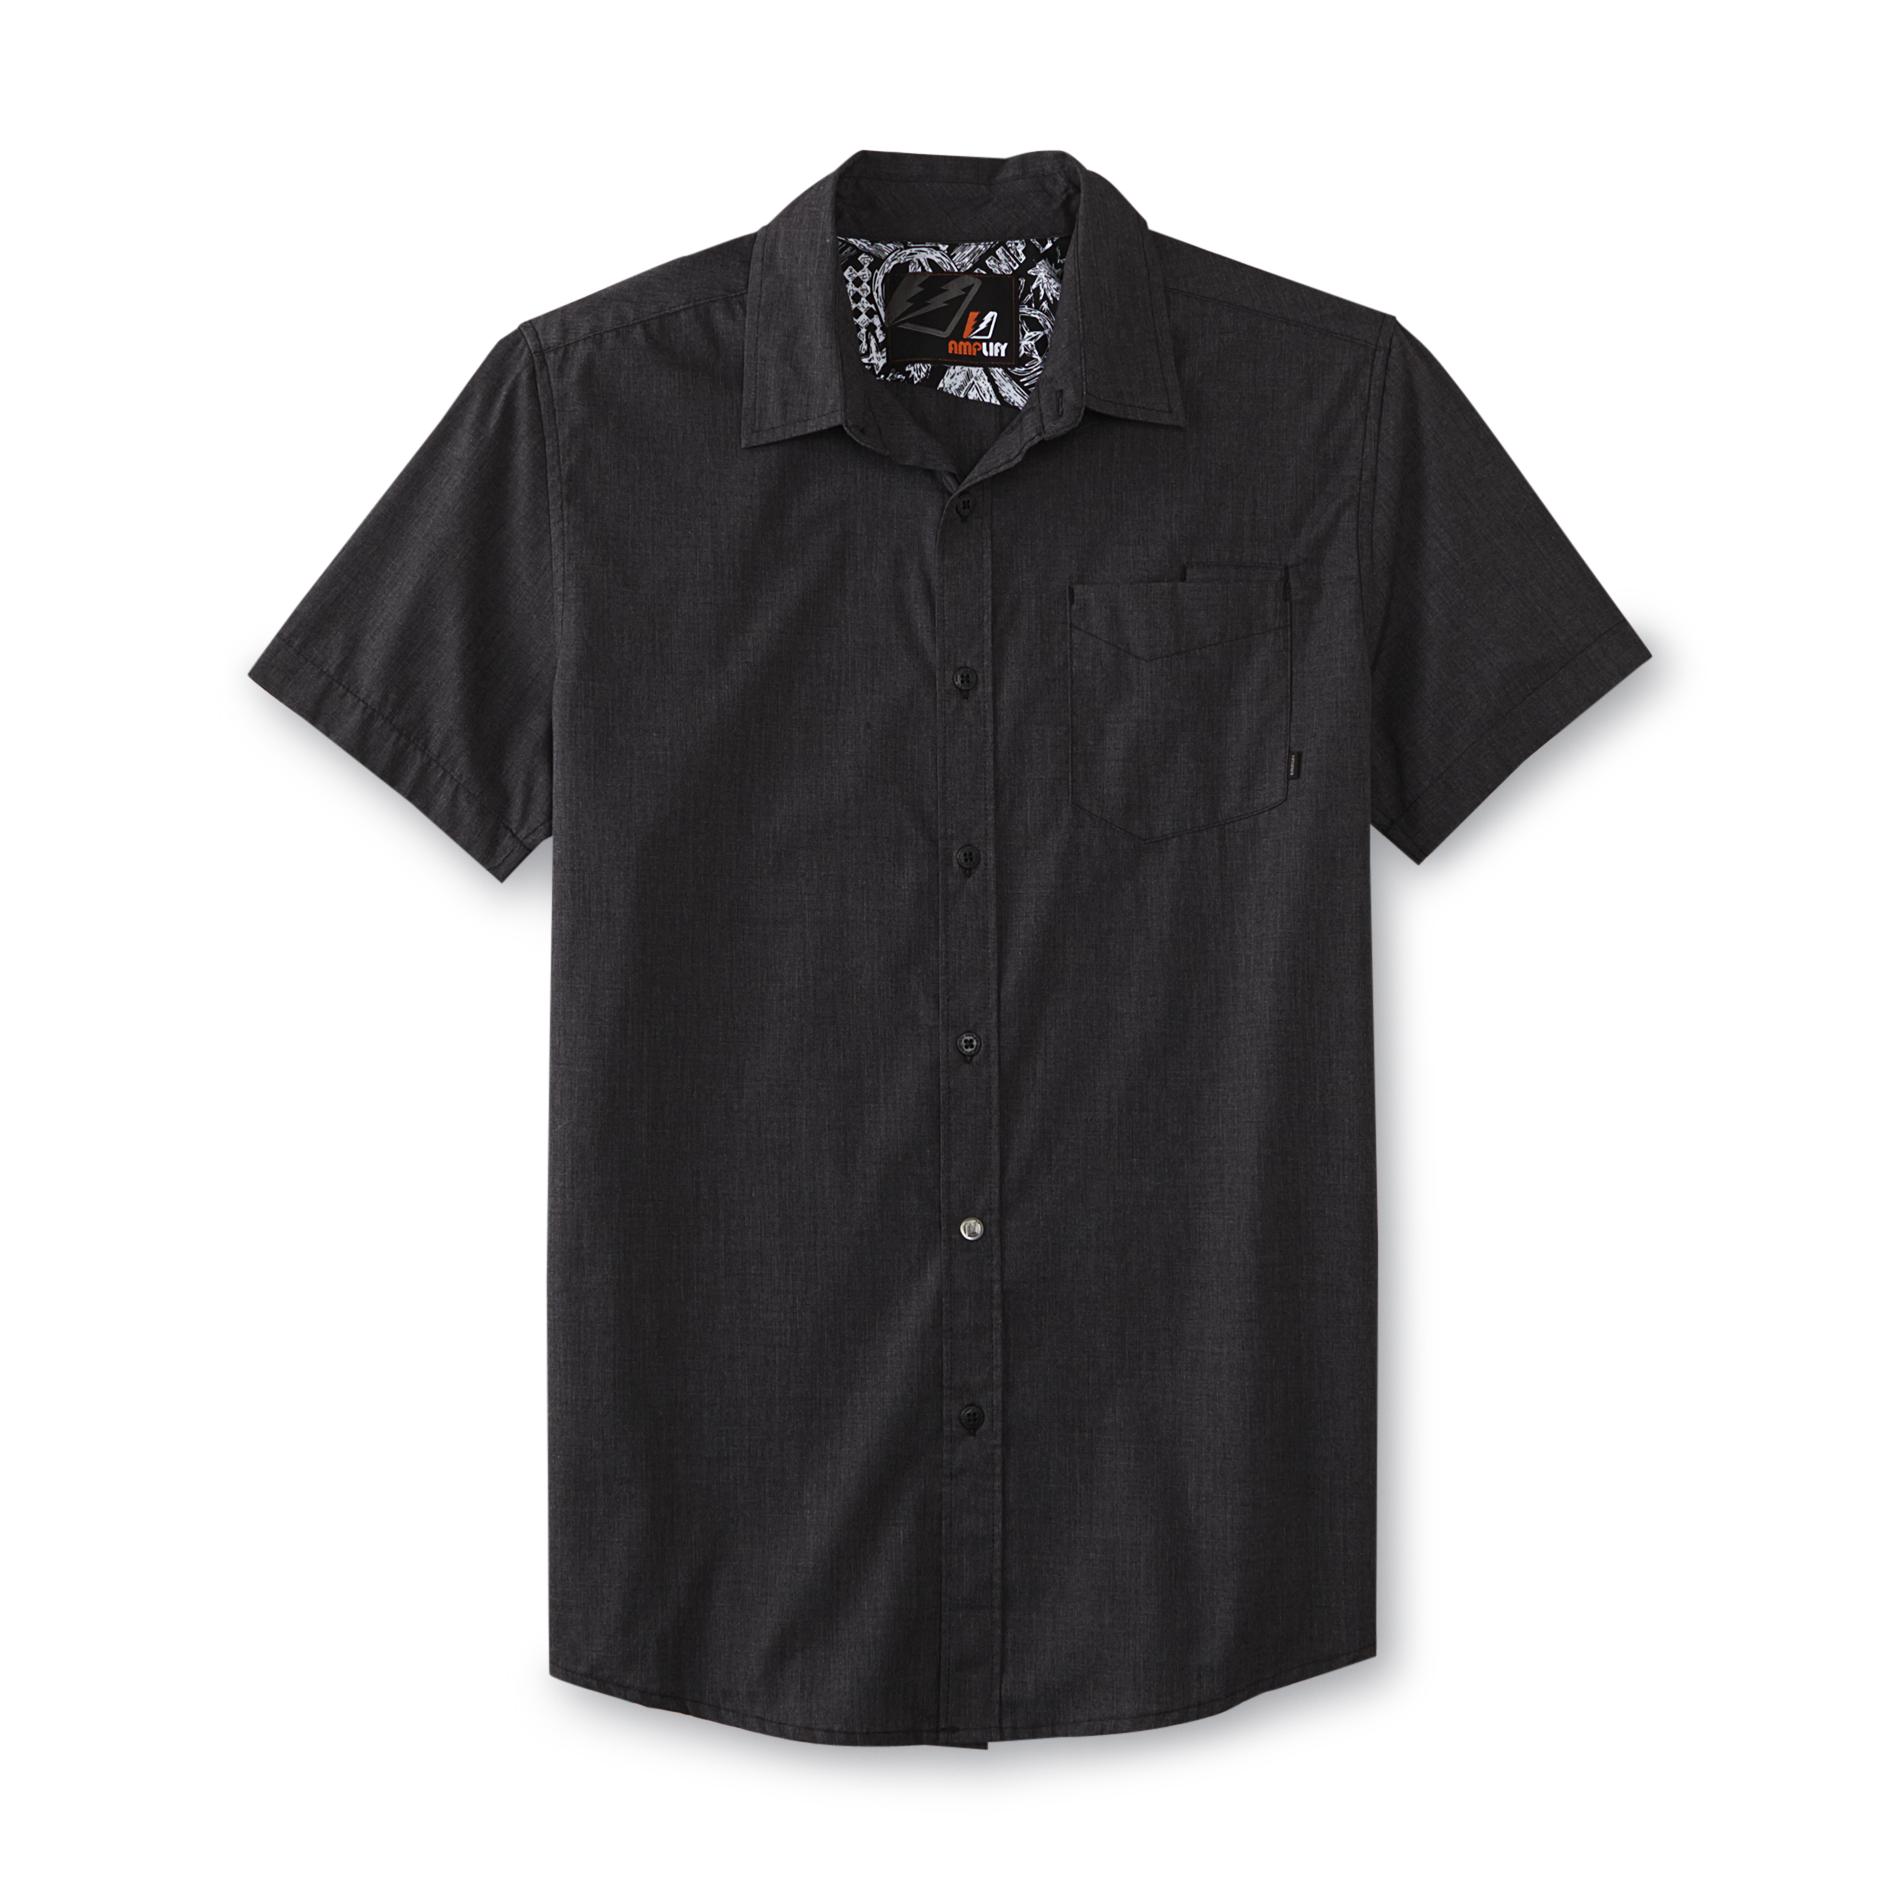 Young Men's Button-Front Shirt